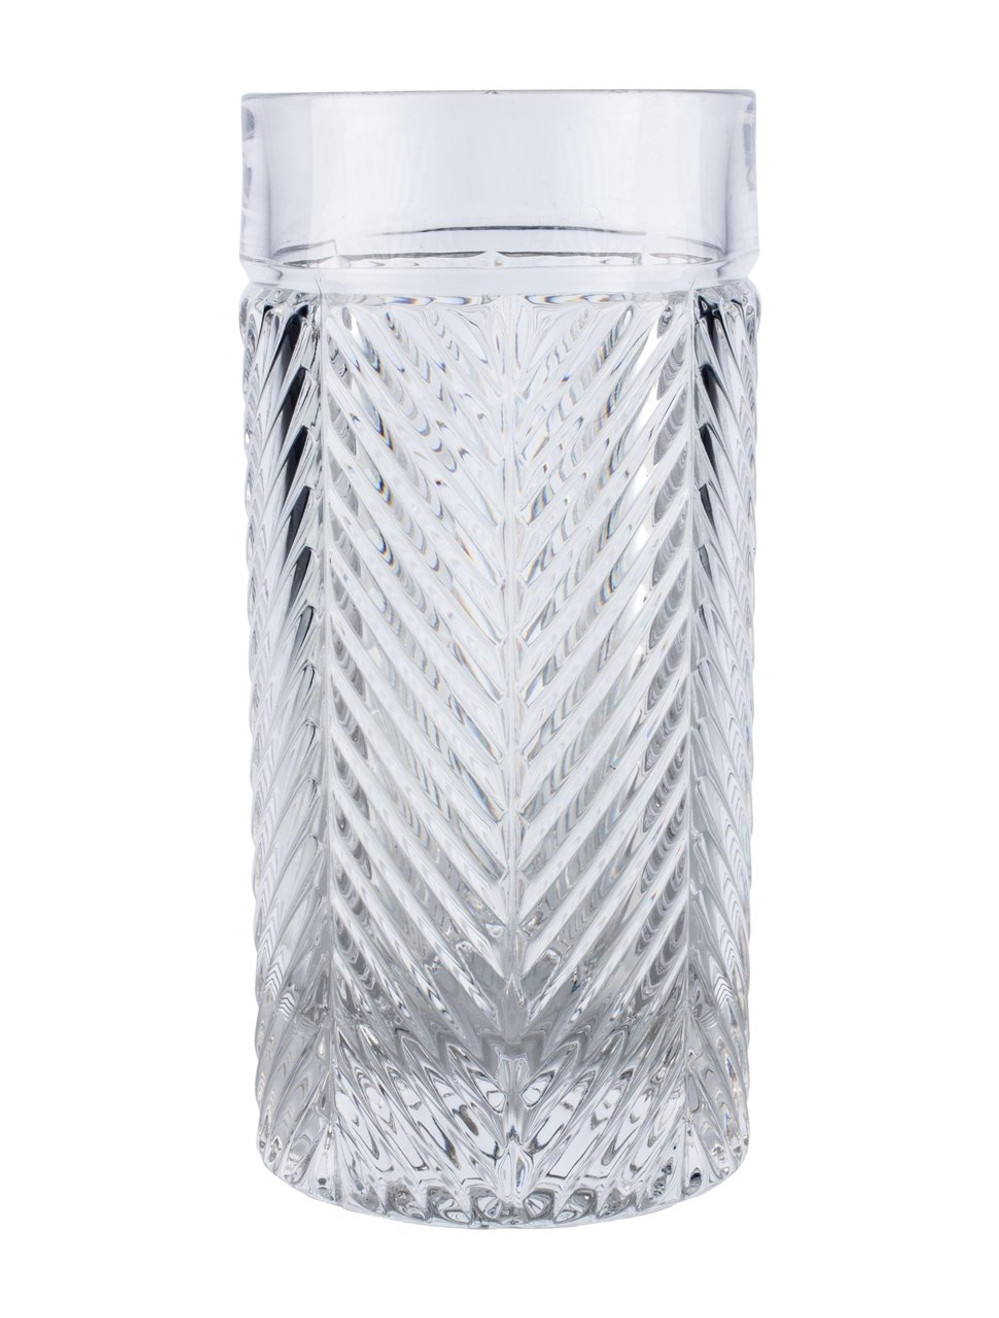 Herringbone Highball Glass by Ralph Lauren Crystal